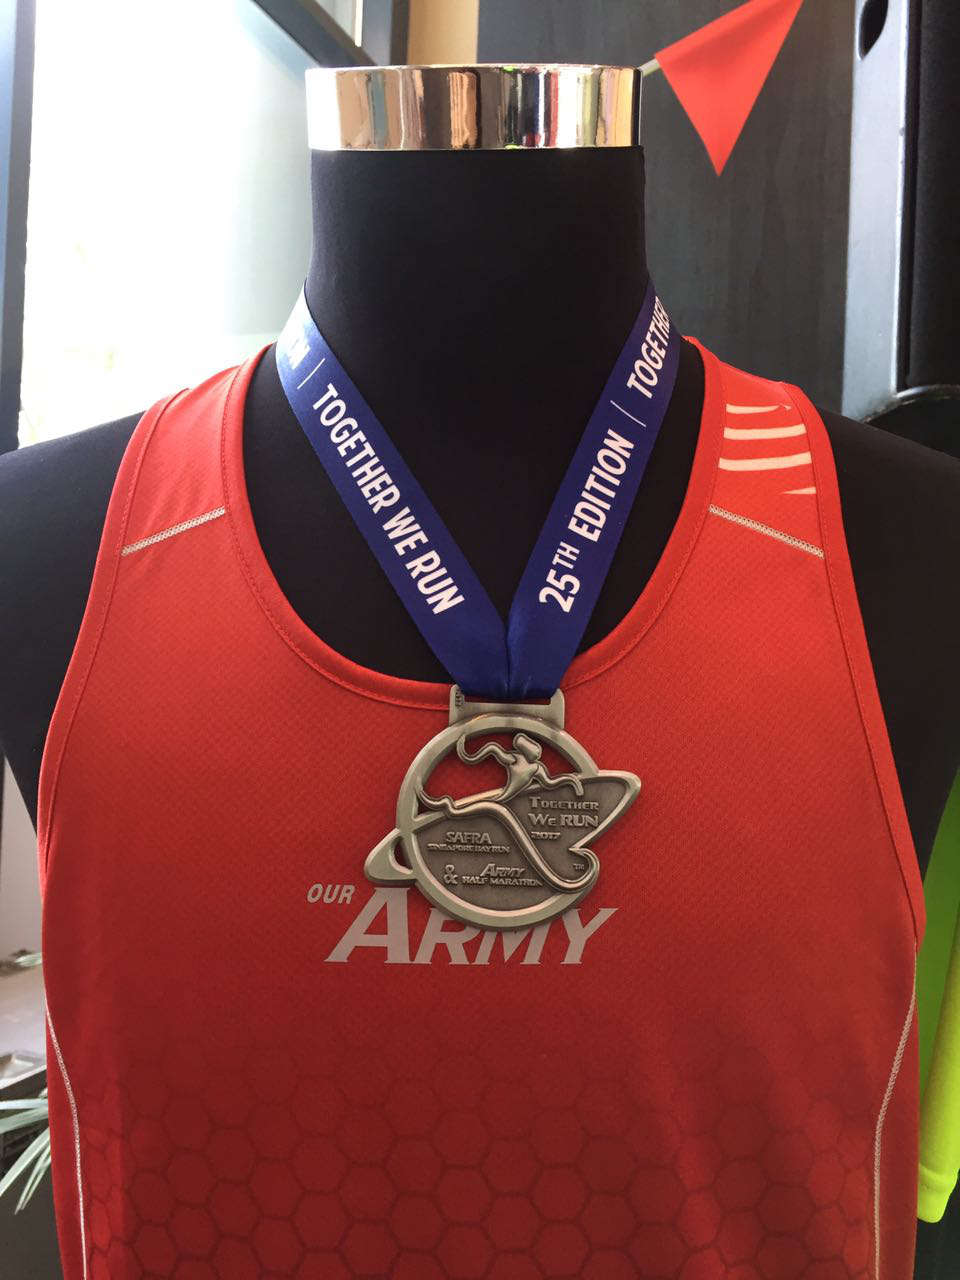 SAFRA Singapore Bay Run & Army Half Marathon (SSBR & AHM) 2017 Medals Designs and Race Entitlements